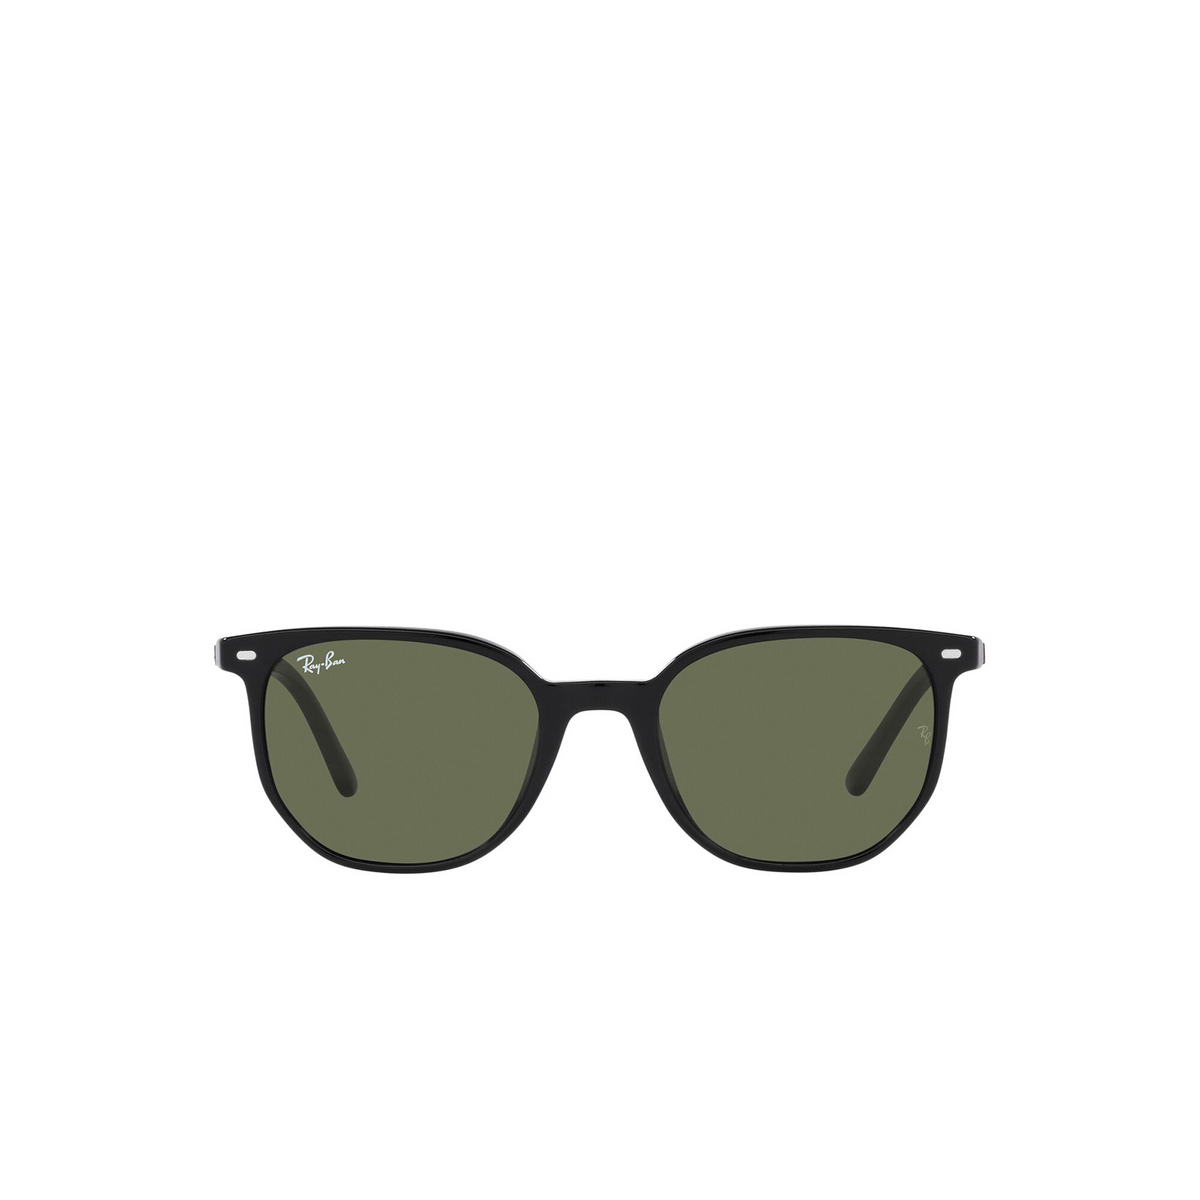 Ray-Ban ELLIOT Sunglasses 901/31 Black - front view